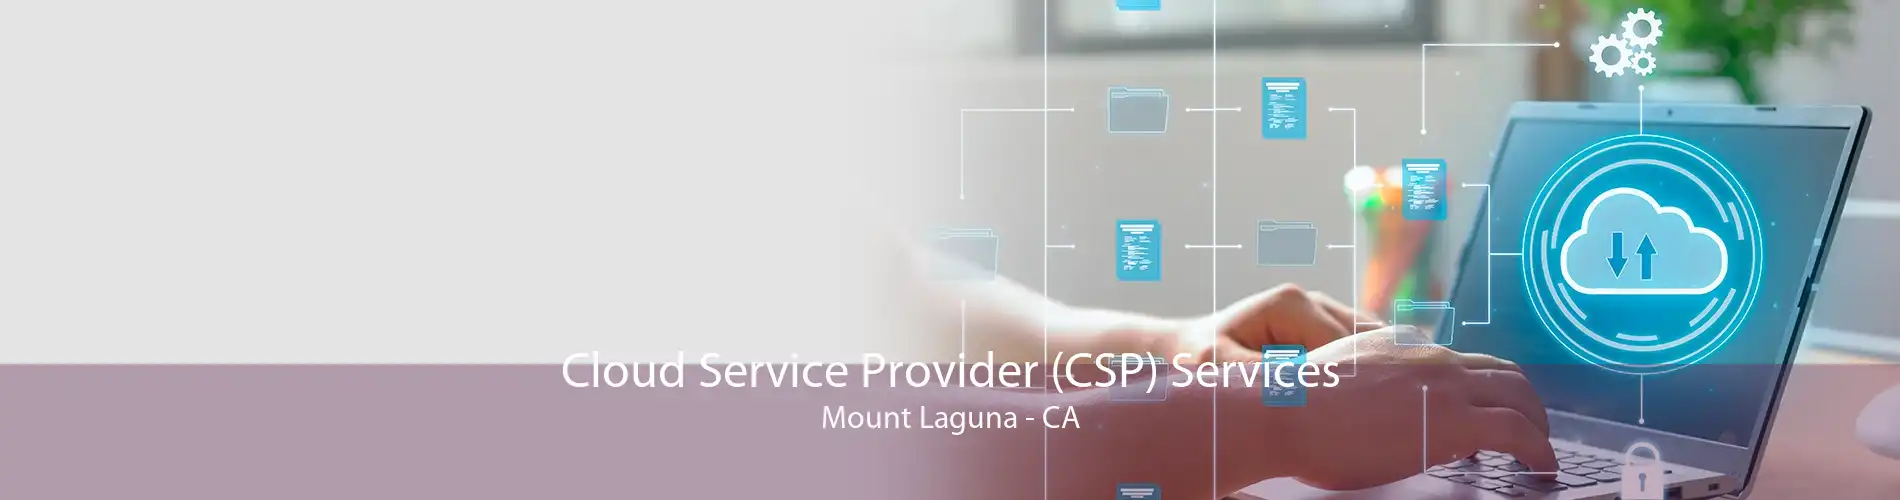 Cloud Service Provider (CSP) Services Mount Laguna - CA